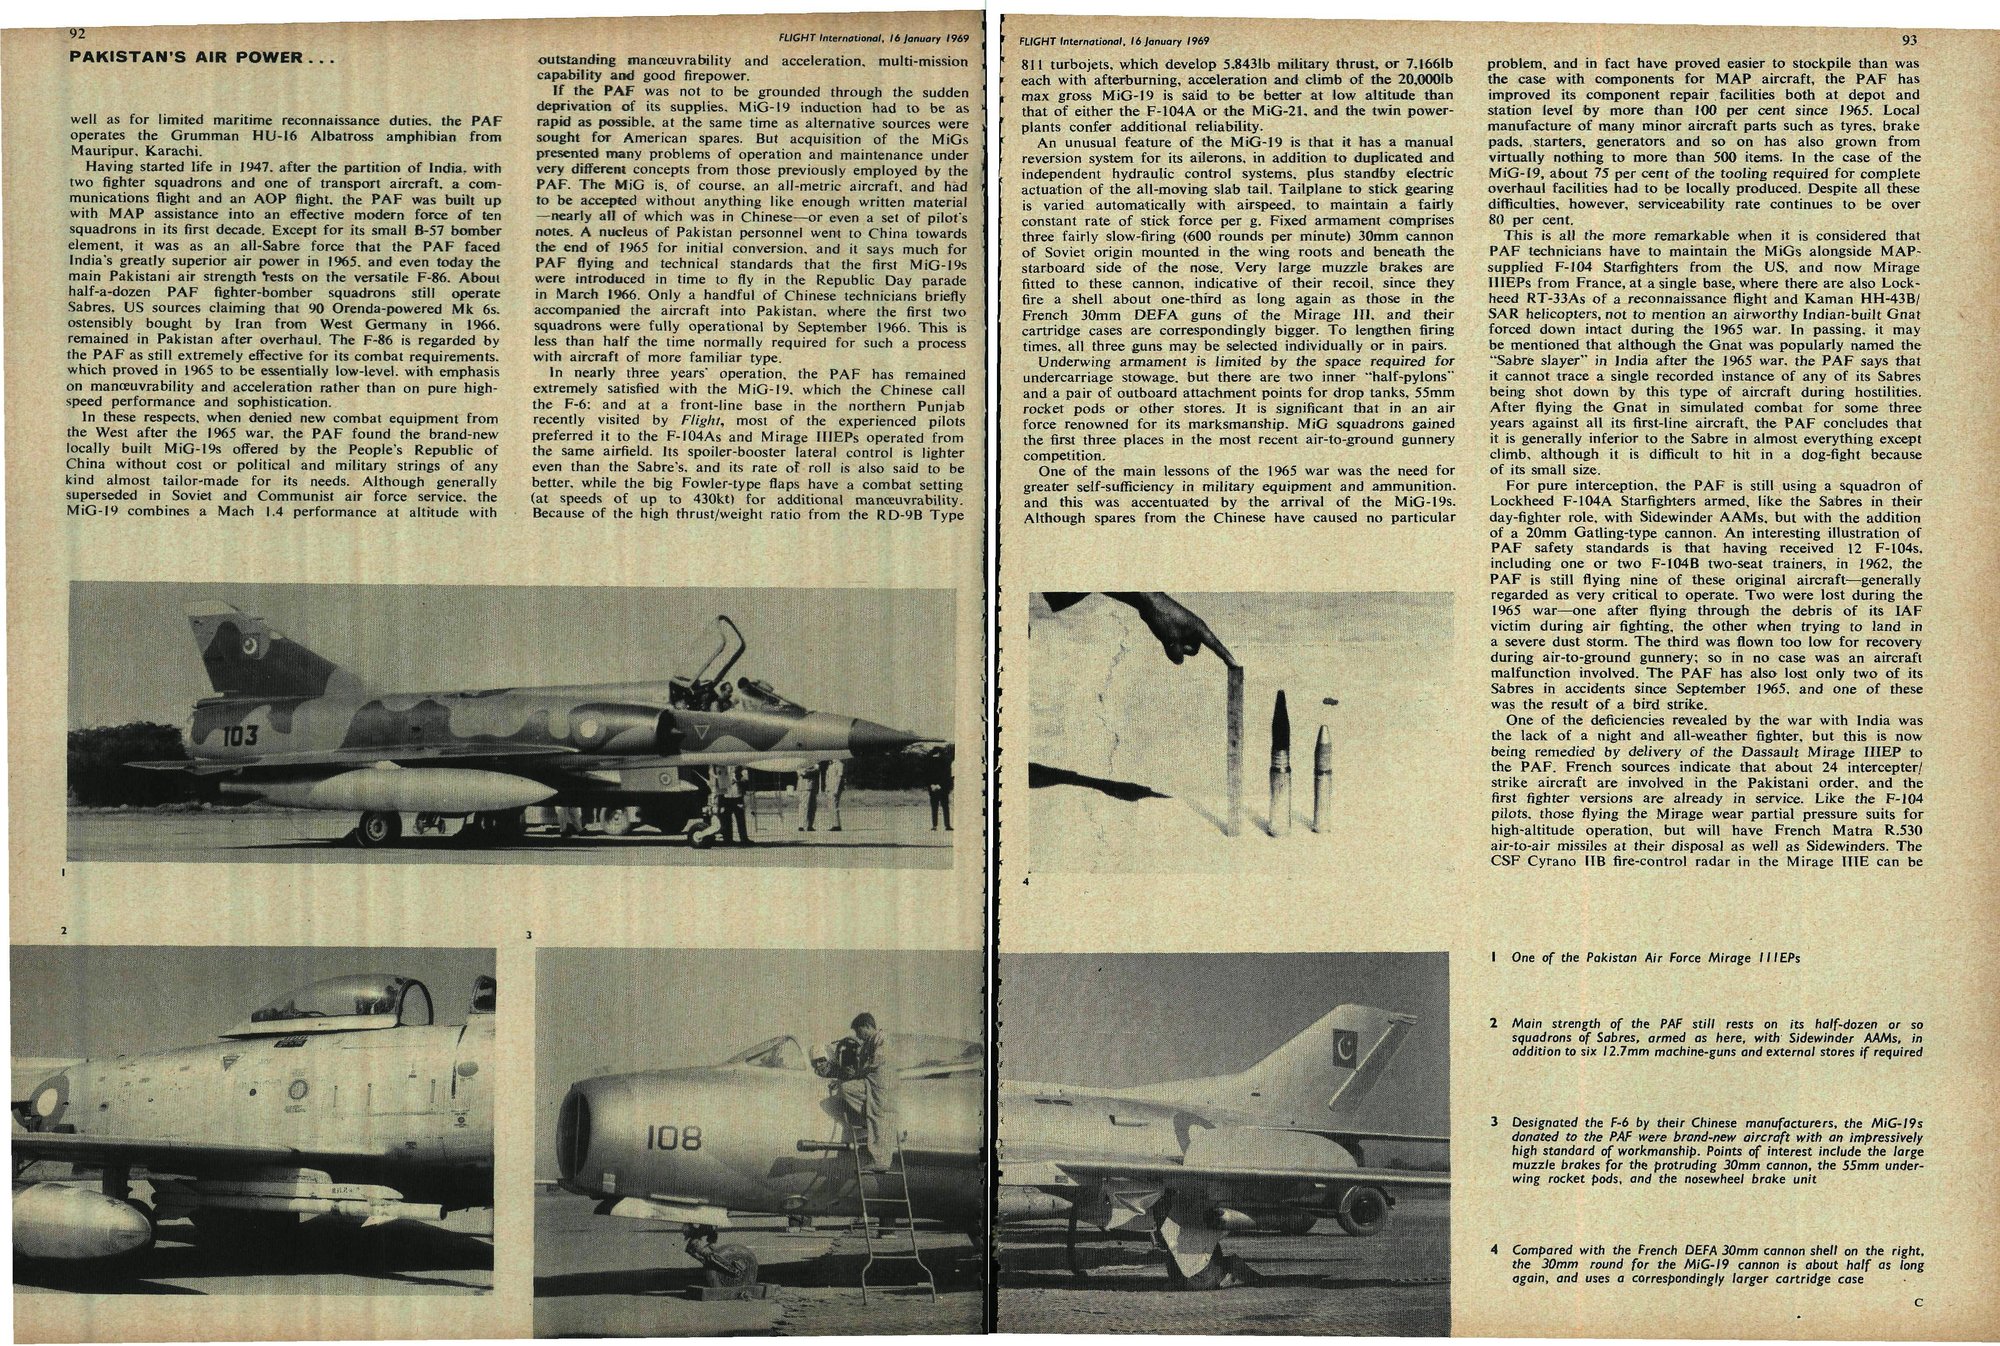 PAKISTAN'S AIR POWER-FLIGHT International, 16 January 1969-1(c).jpg